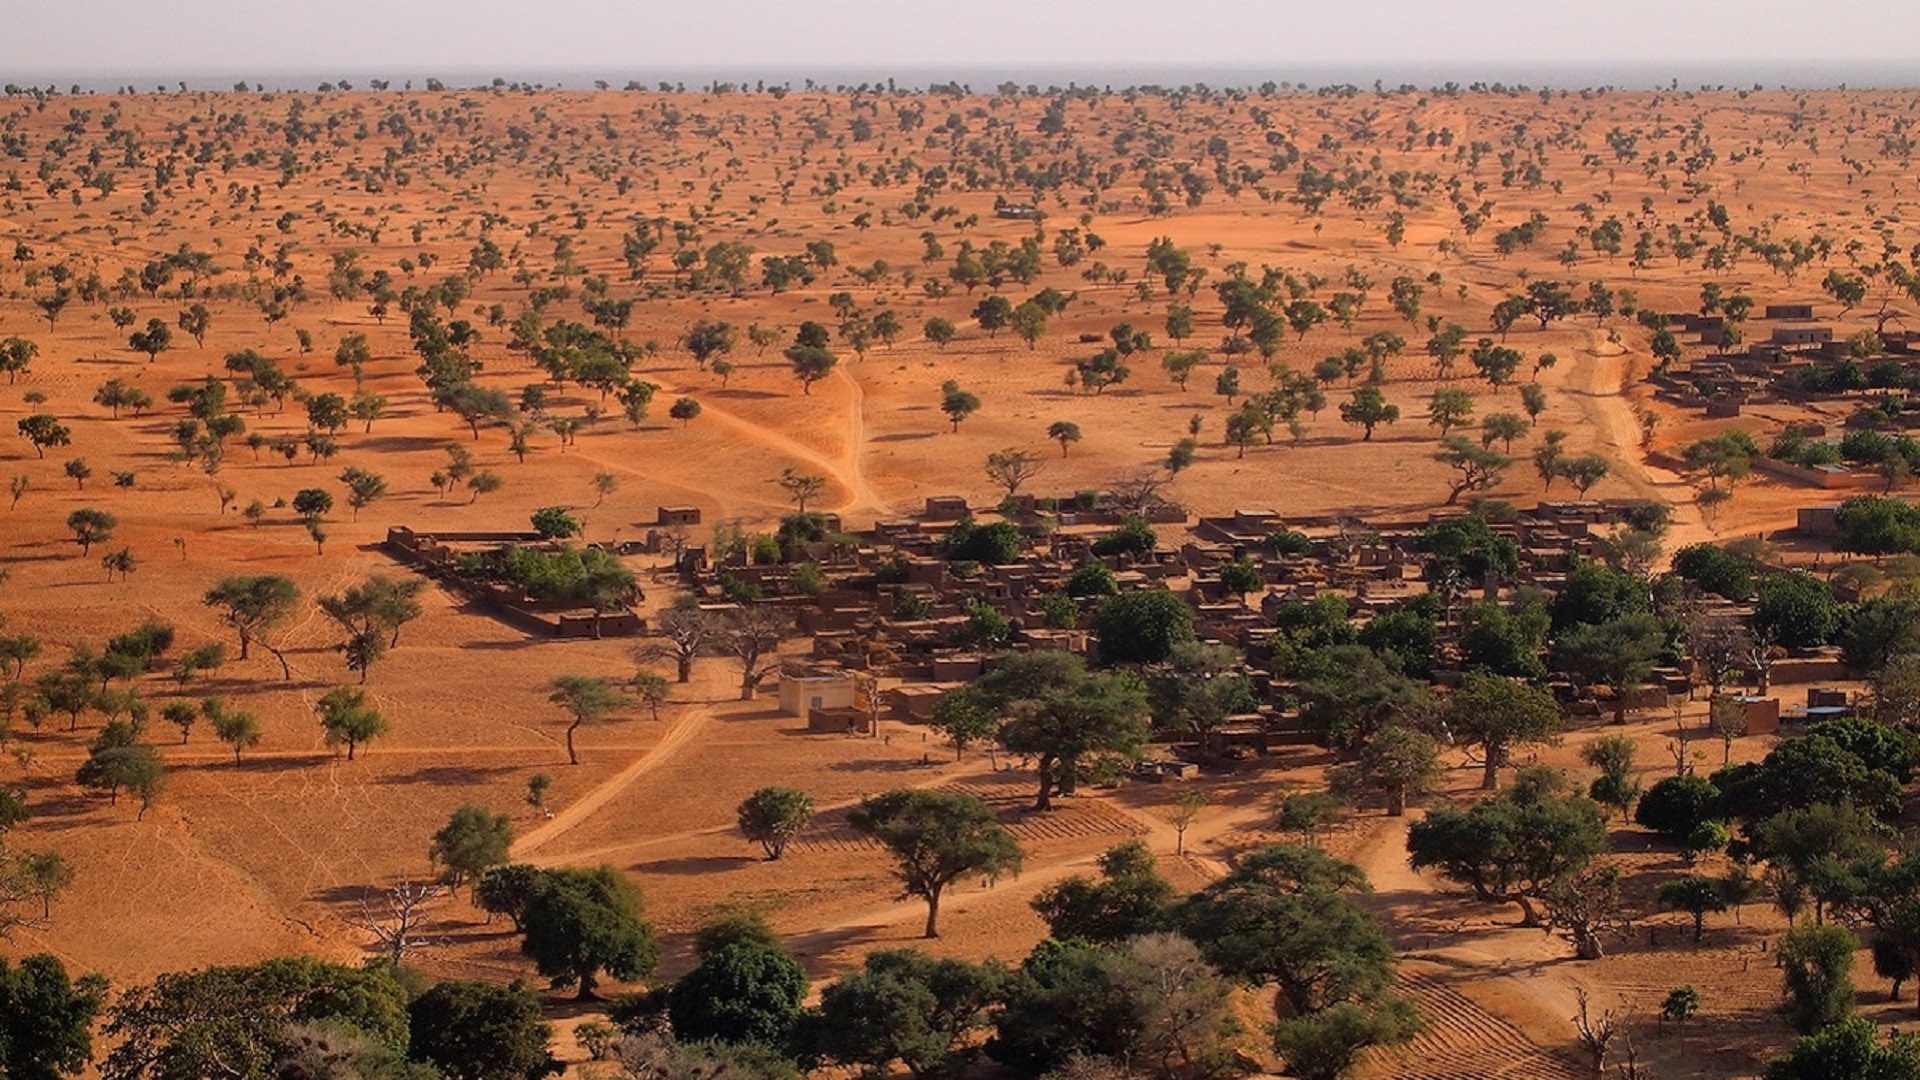 Sahara actually has quite a few trees